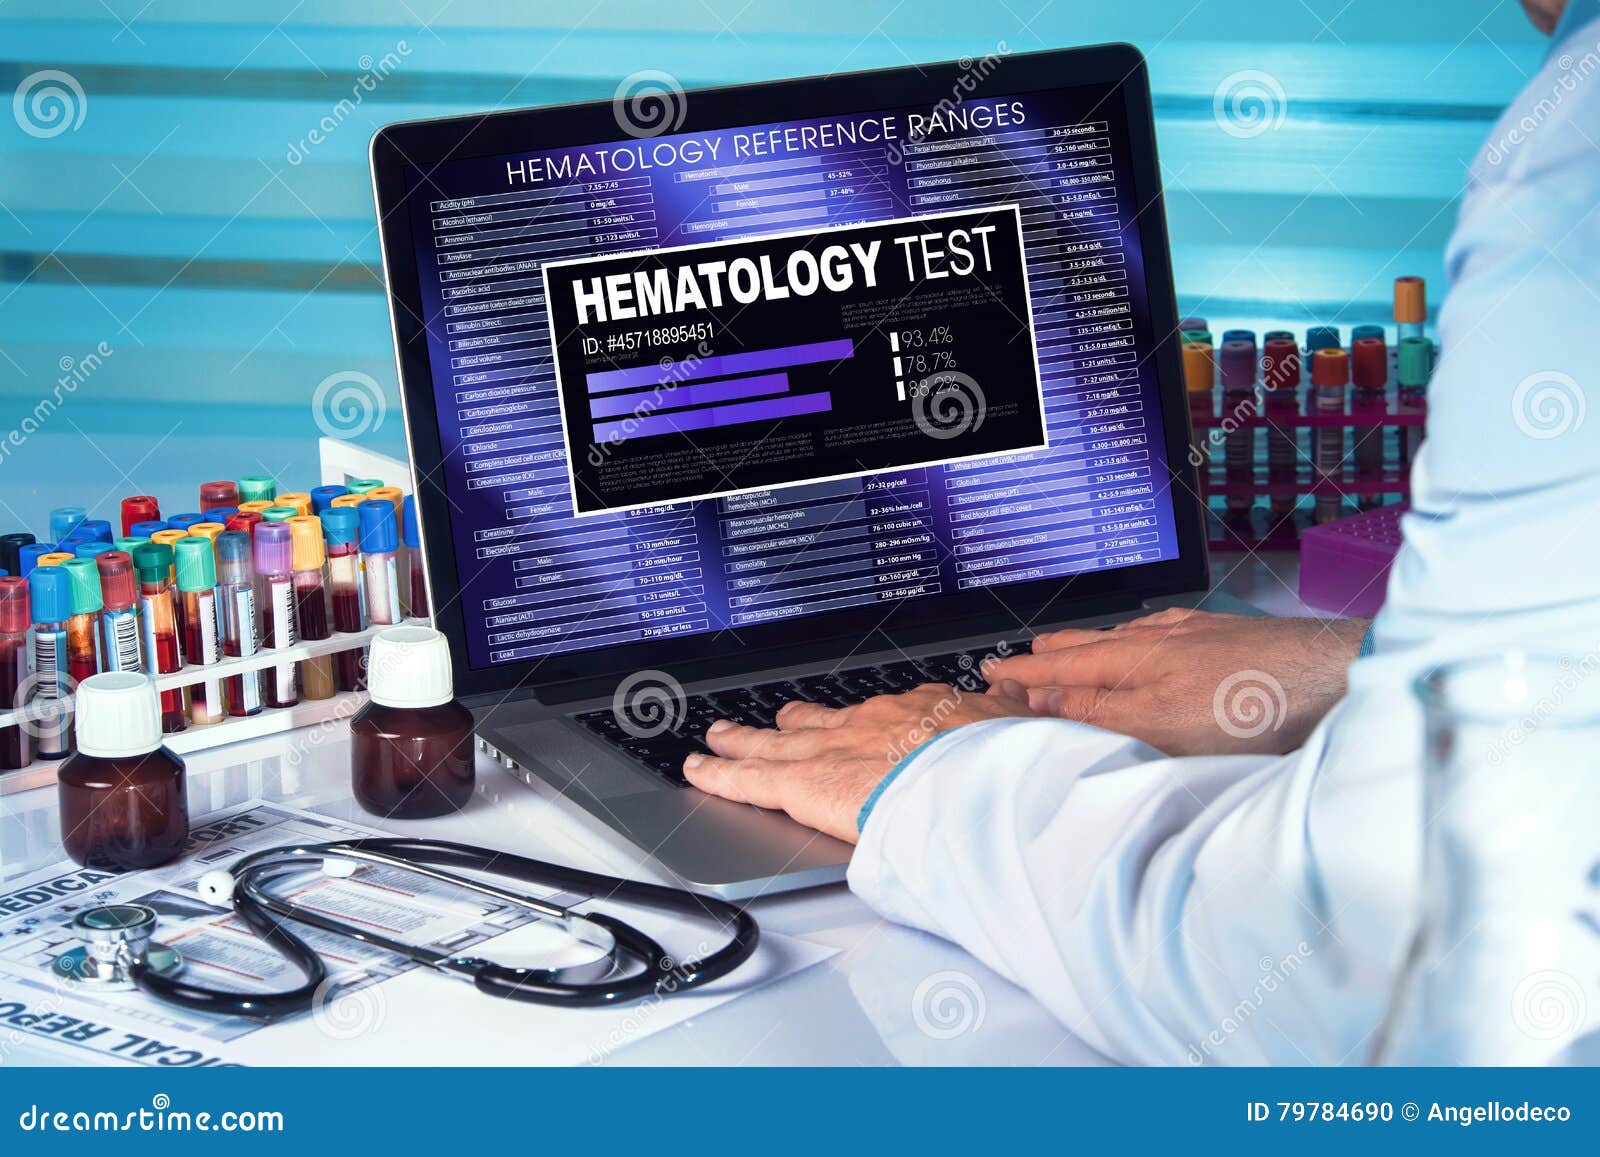 hematology test. doctor in lab examining blood sample in laptop